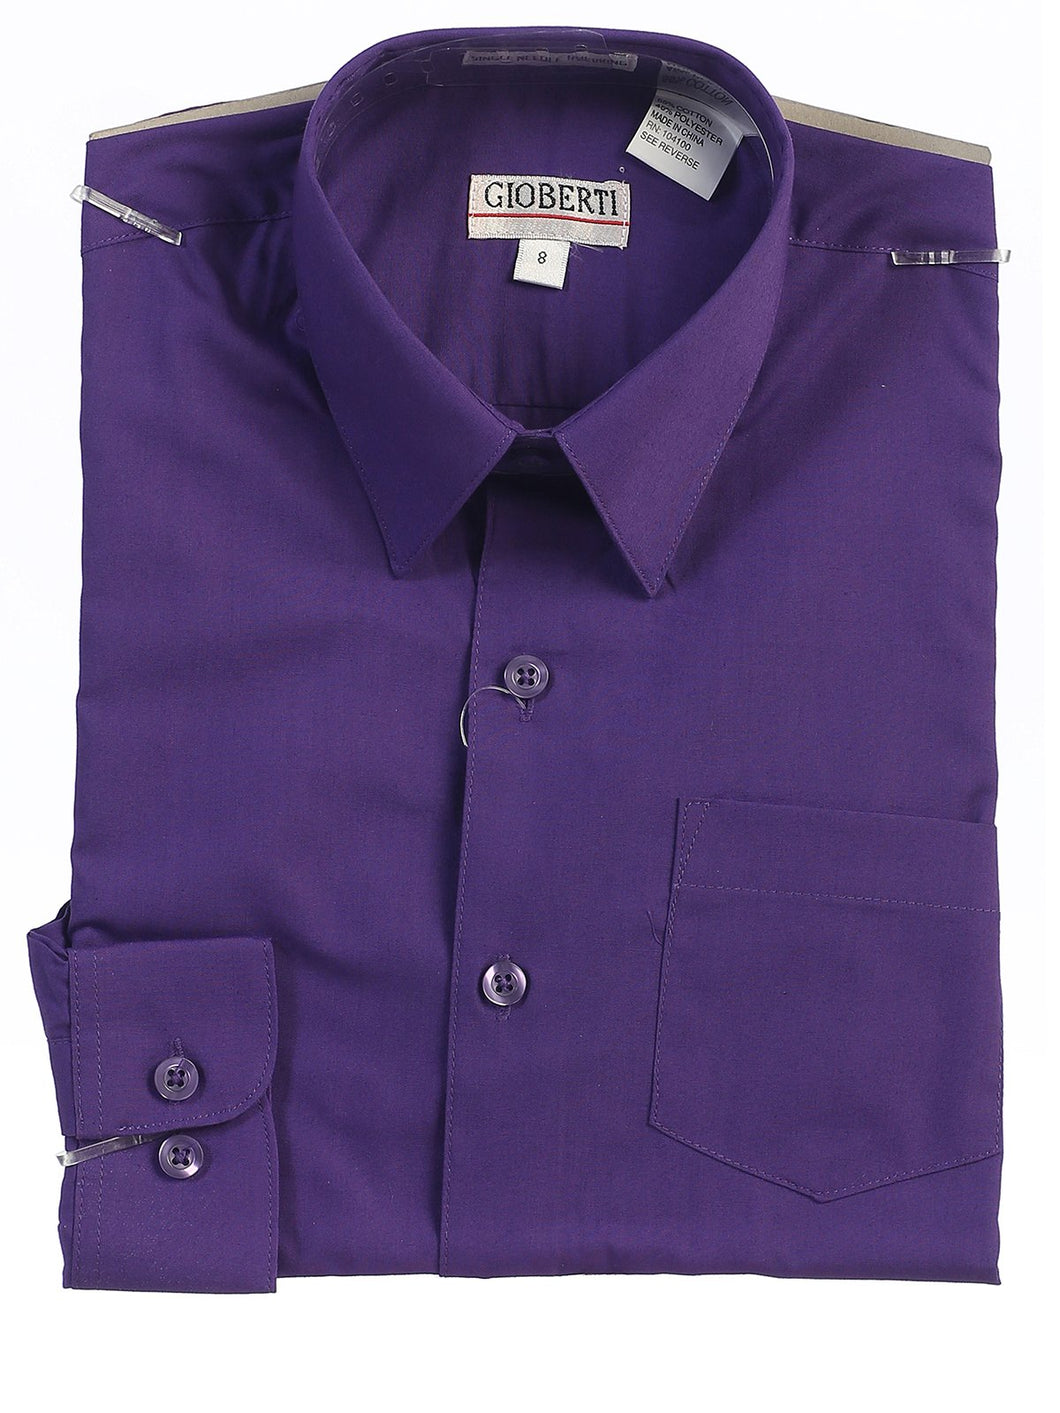 Gioberti - Button Up Dress Shirt - Purple